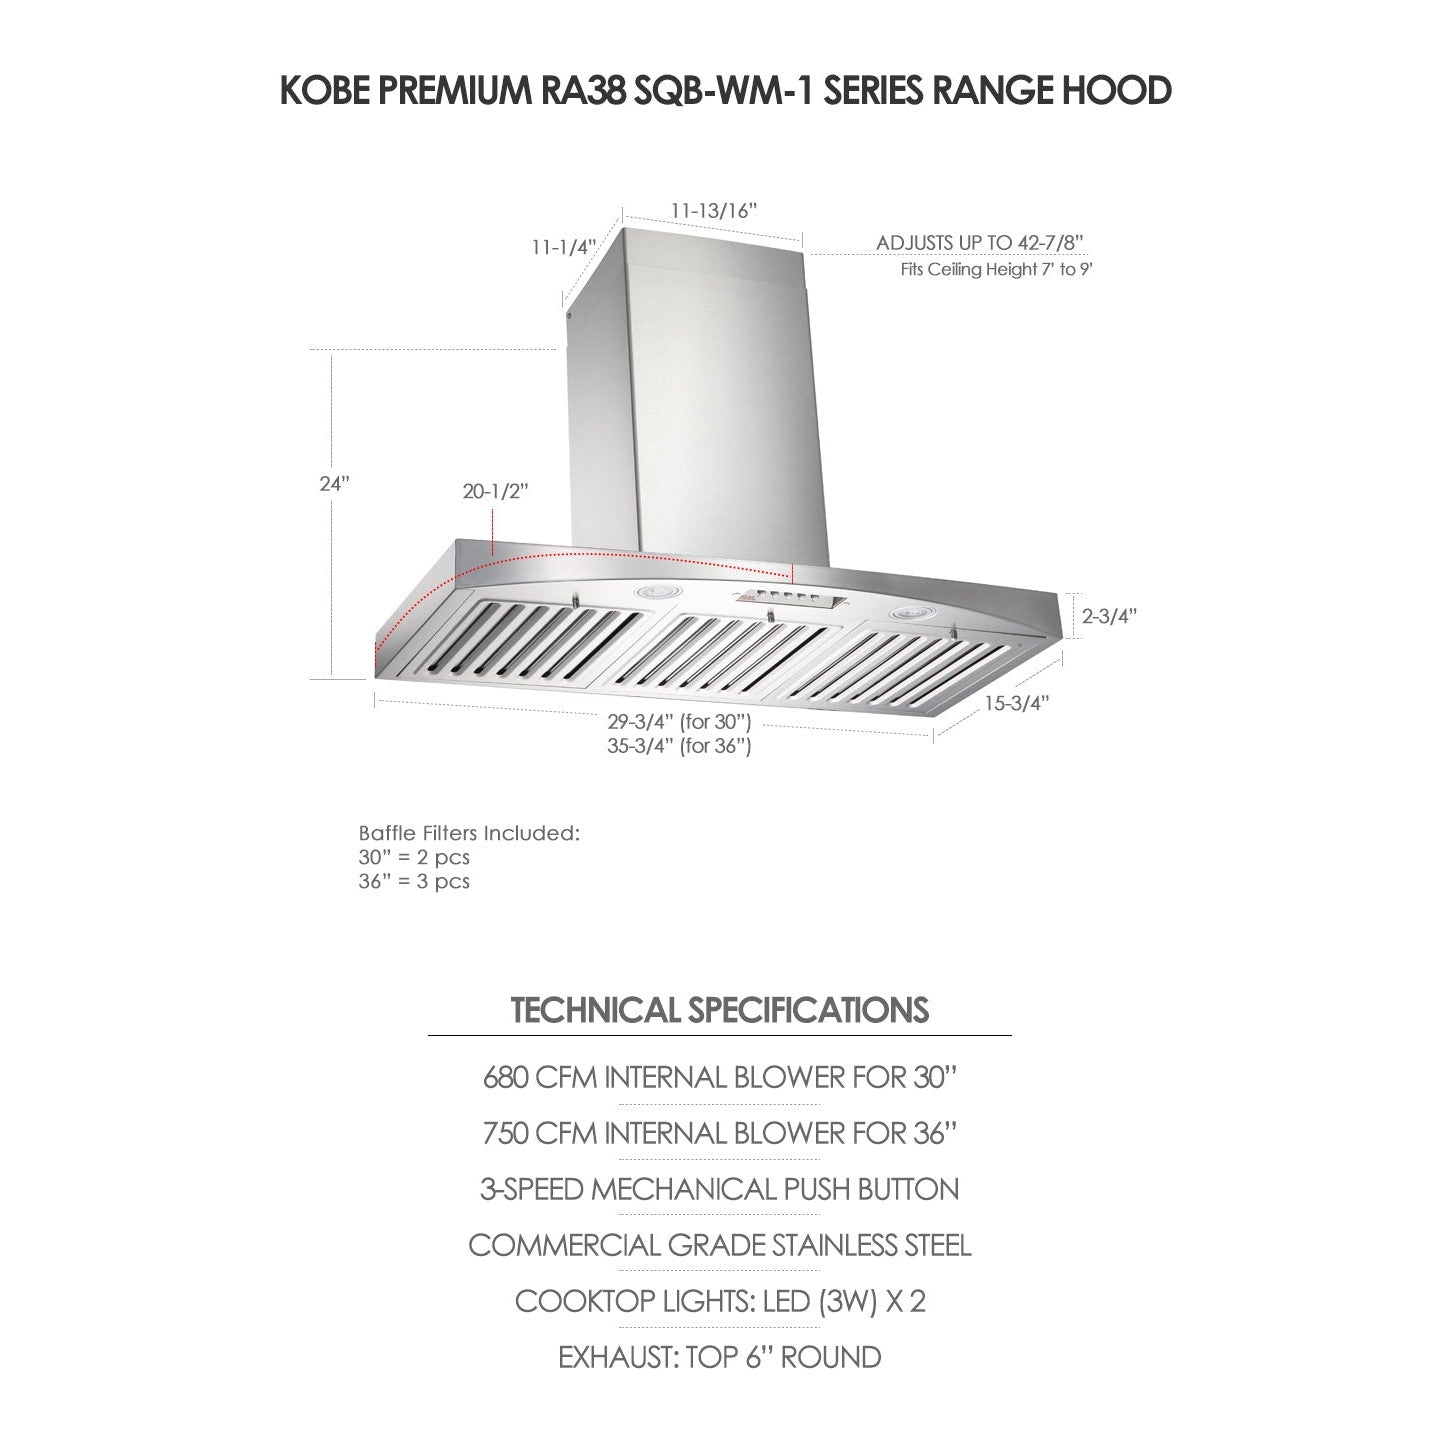 KOBE Premium RA38 SQB-1 Series 36" Wall Mount Range Hood With 750 CFM Internal Blower, 3-Speed Mechanical Push Button, Dishwasher-Safe Baffle Filters, and LED Lights